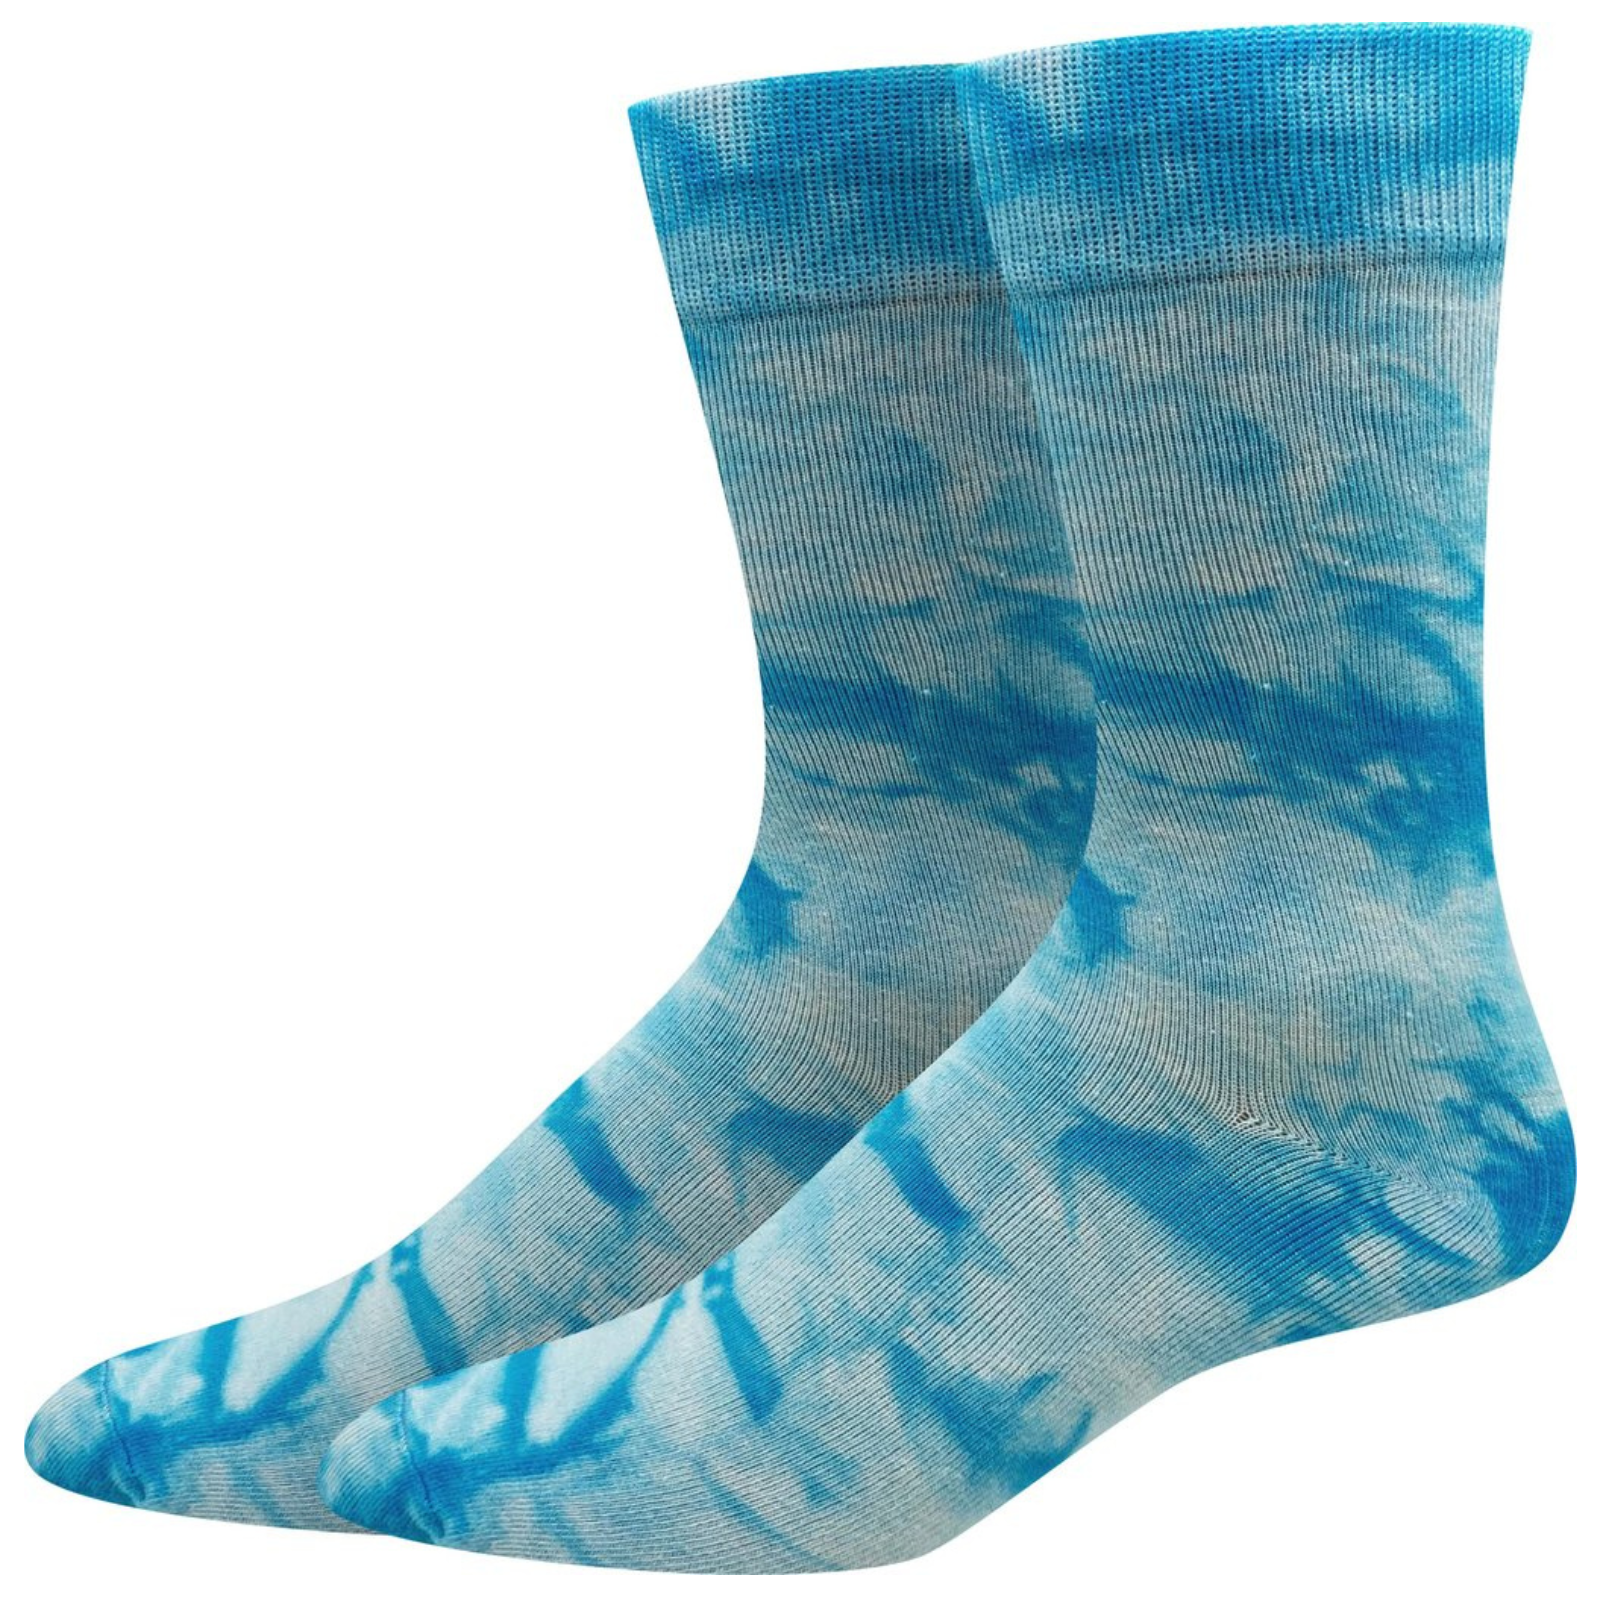 Sock Harbor Blue Tie Dye women's and men's crew sock shown on display feet